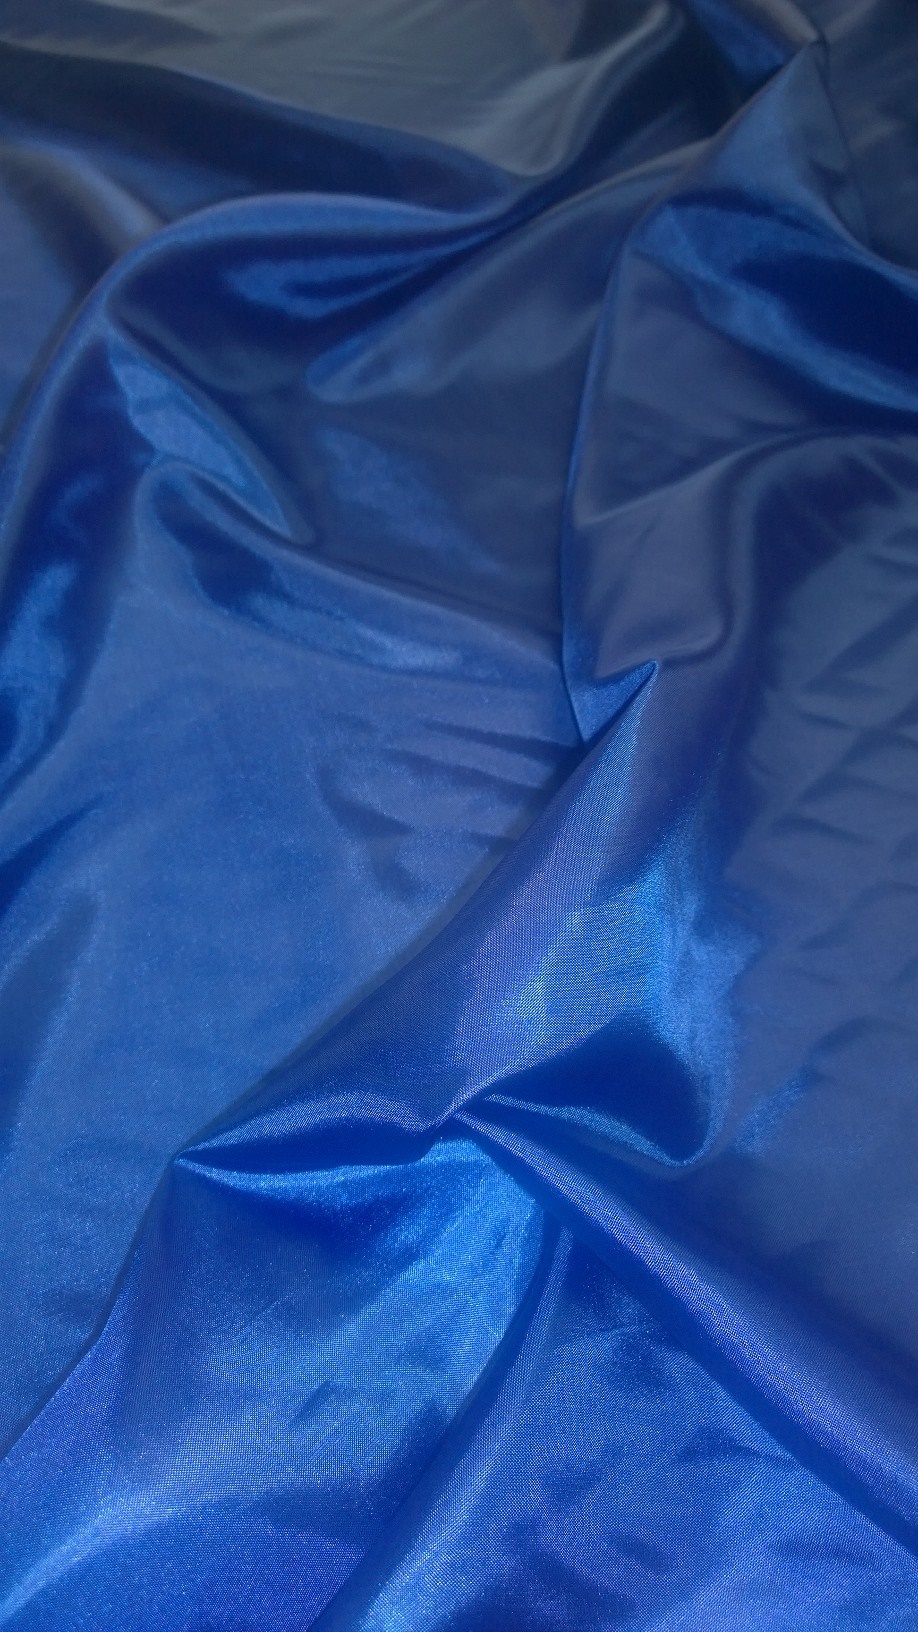 By The Yard- 60" Royal Blue Habotai Fabric - 100% Polyester